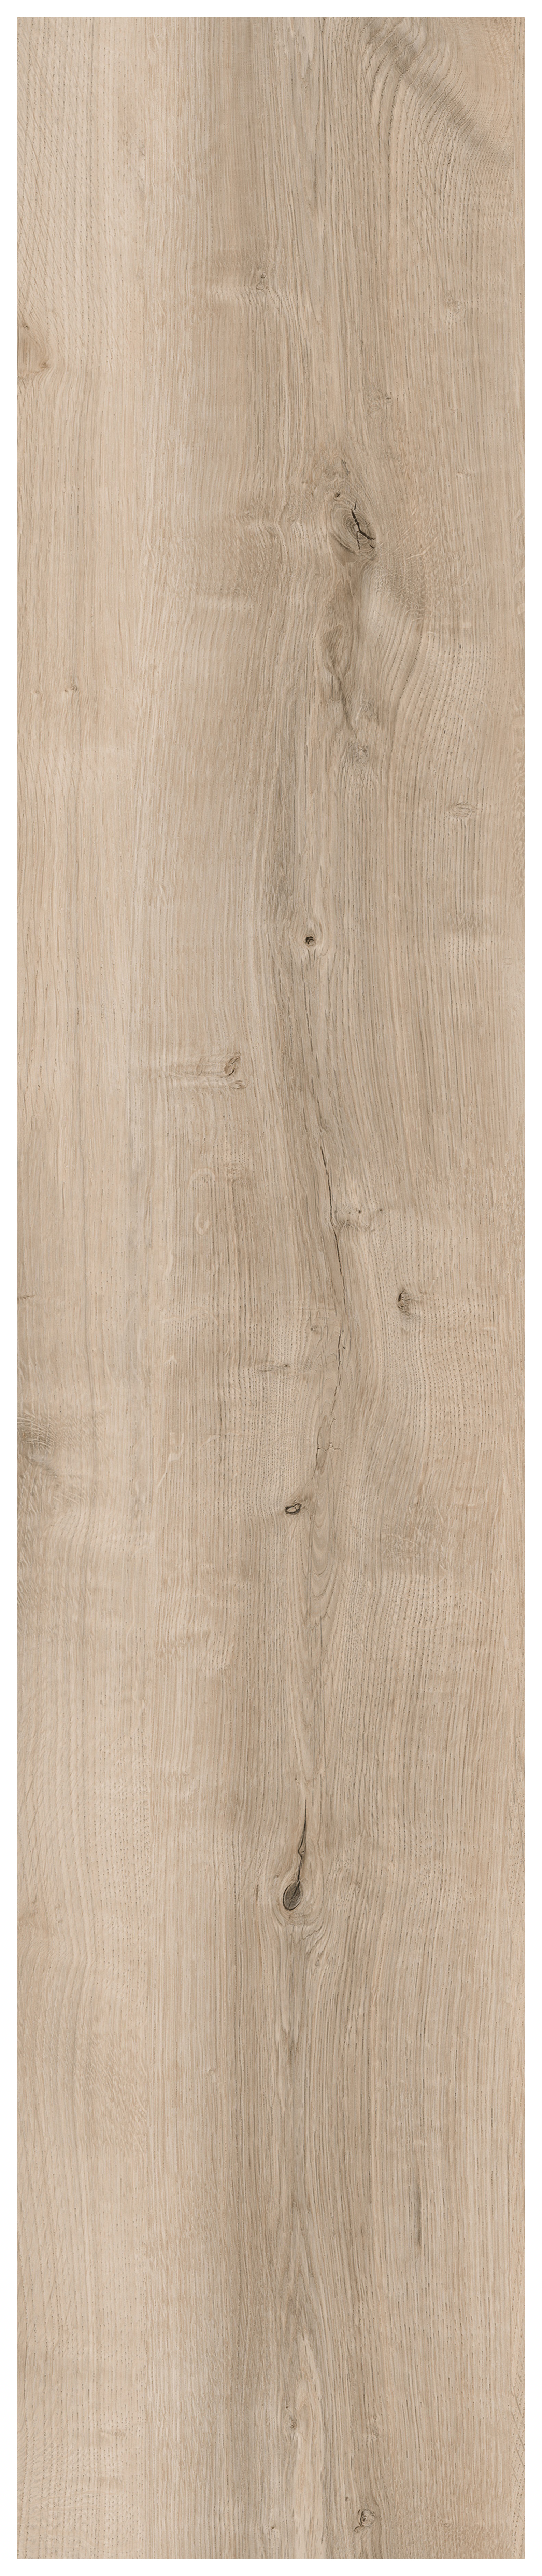 Durham Light Oak Herringbone SPC Flooring with Integrated Underlay - Sample